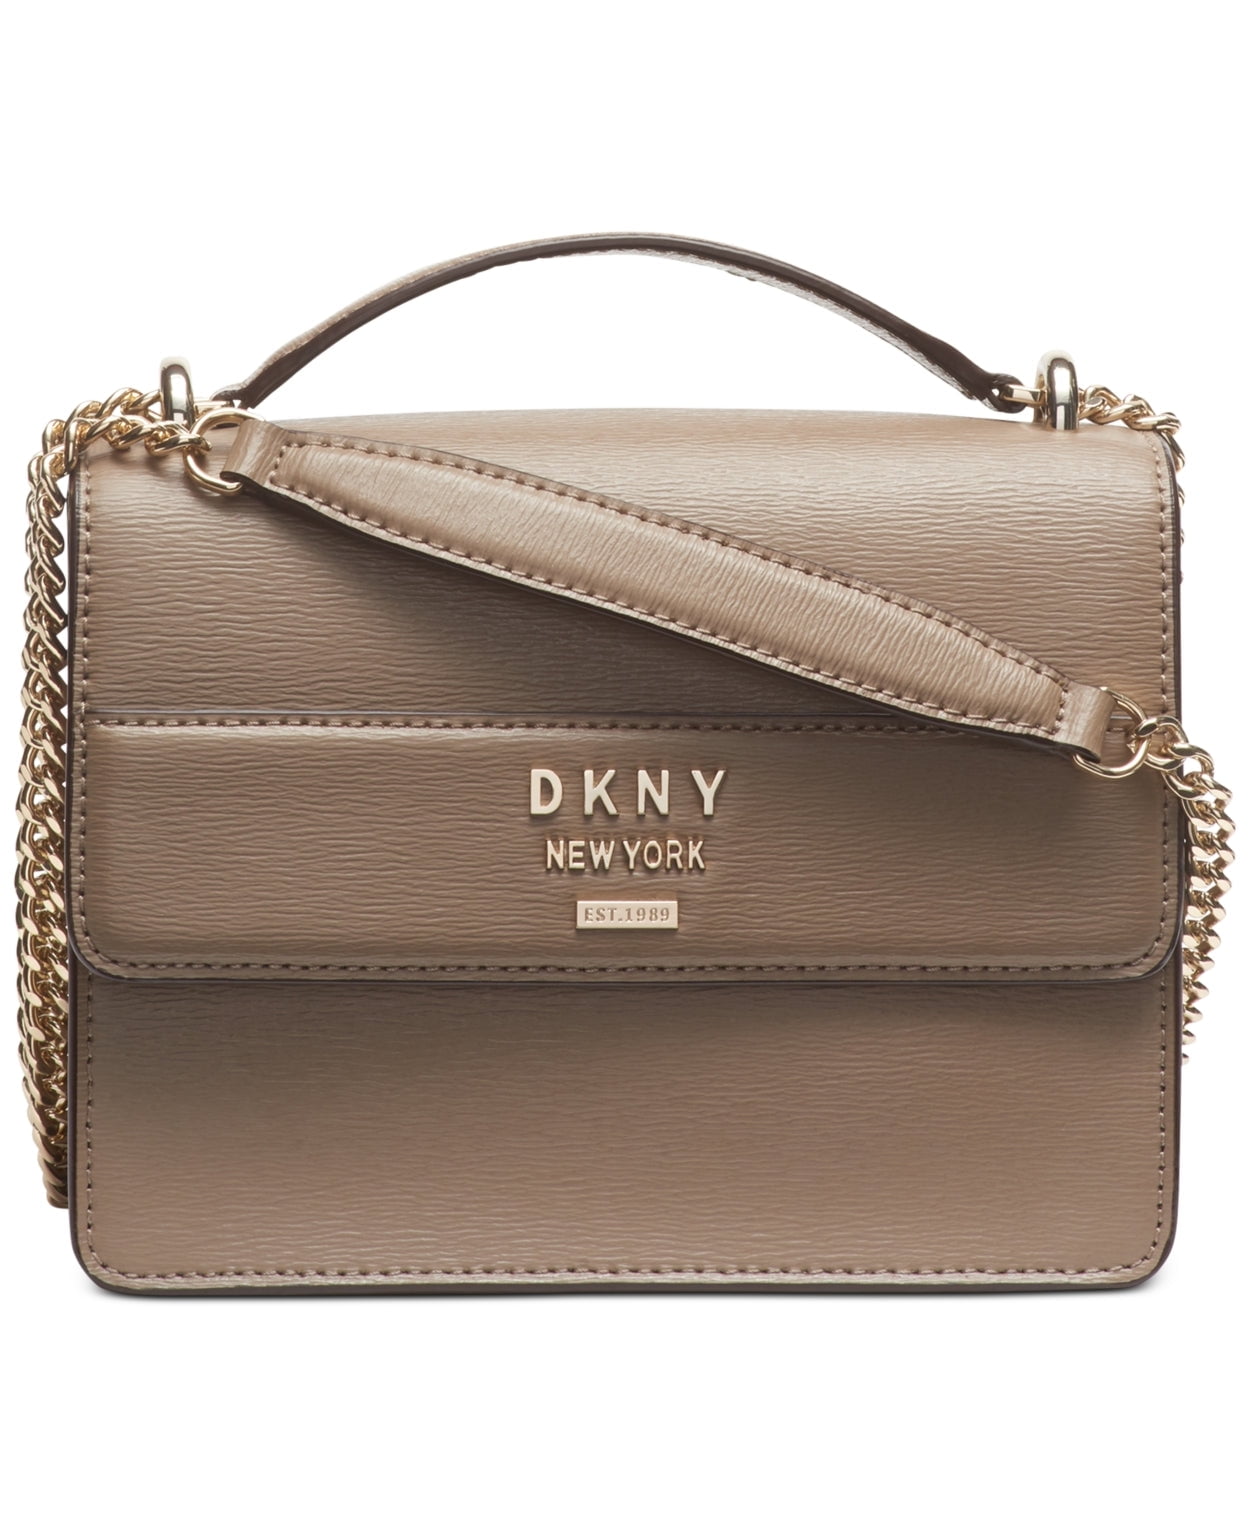 DKNY Womens Ava Leather Satchel